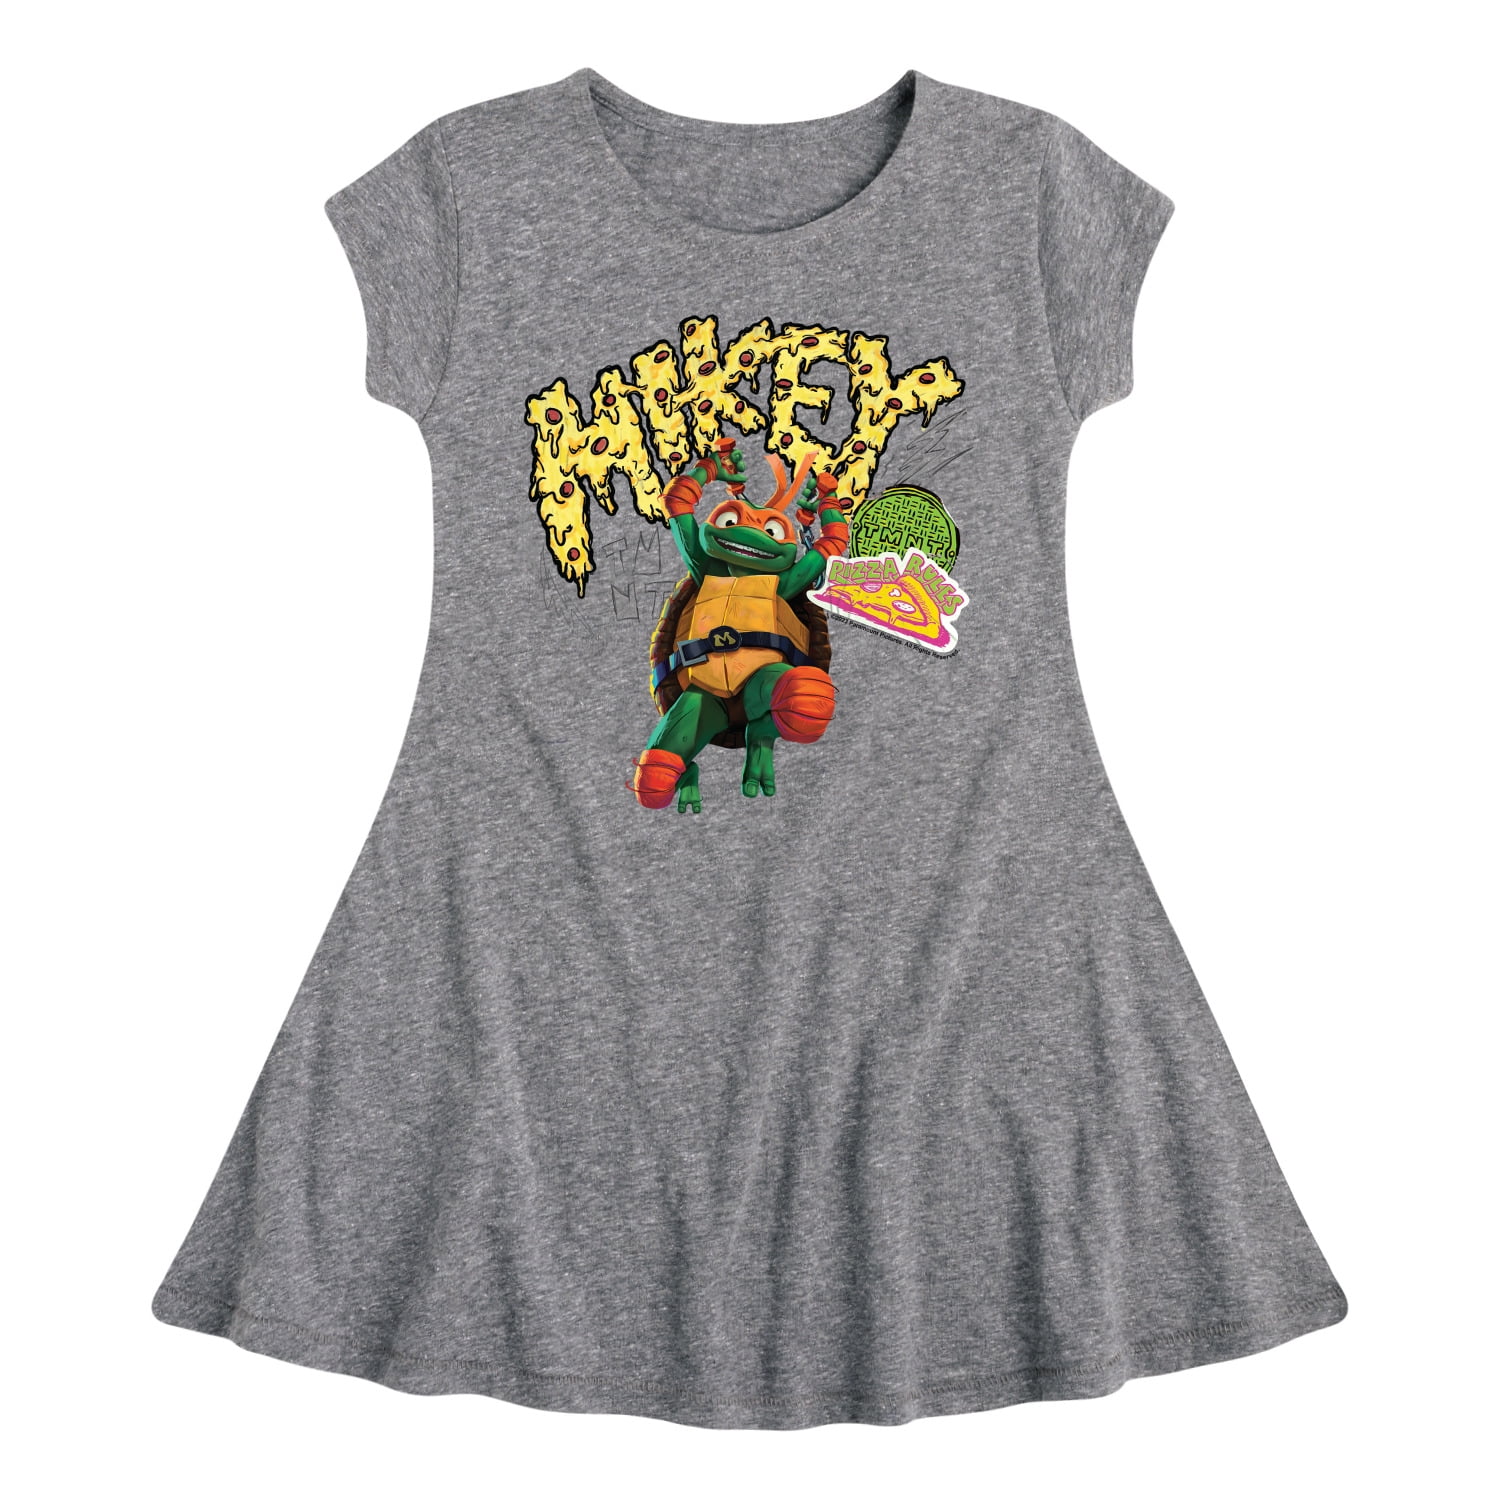 Teenage Mutant Ninja Turtles Girls' Clothing in Teenage Mutant